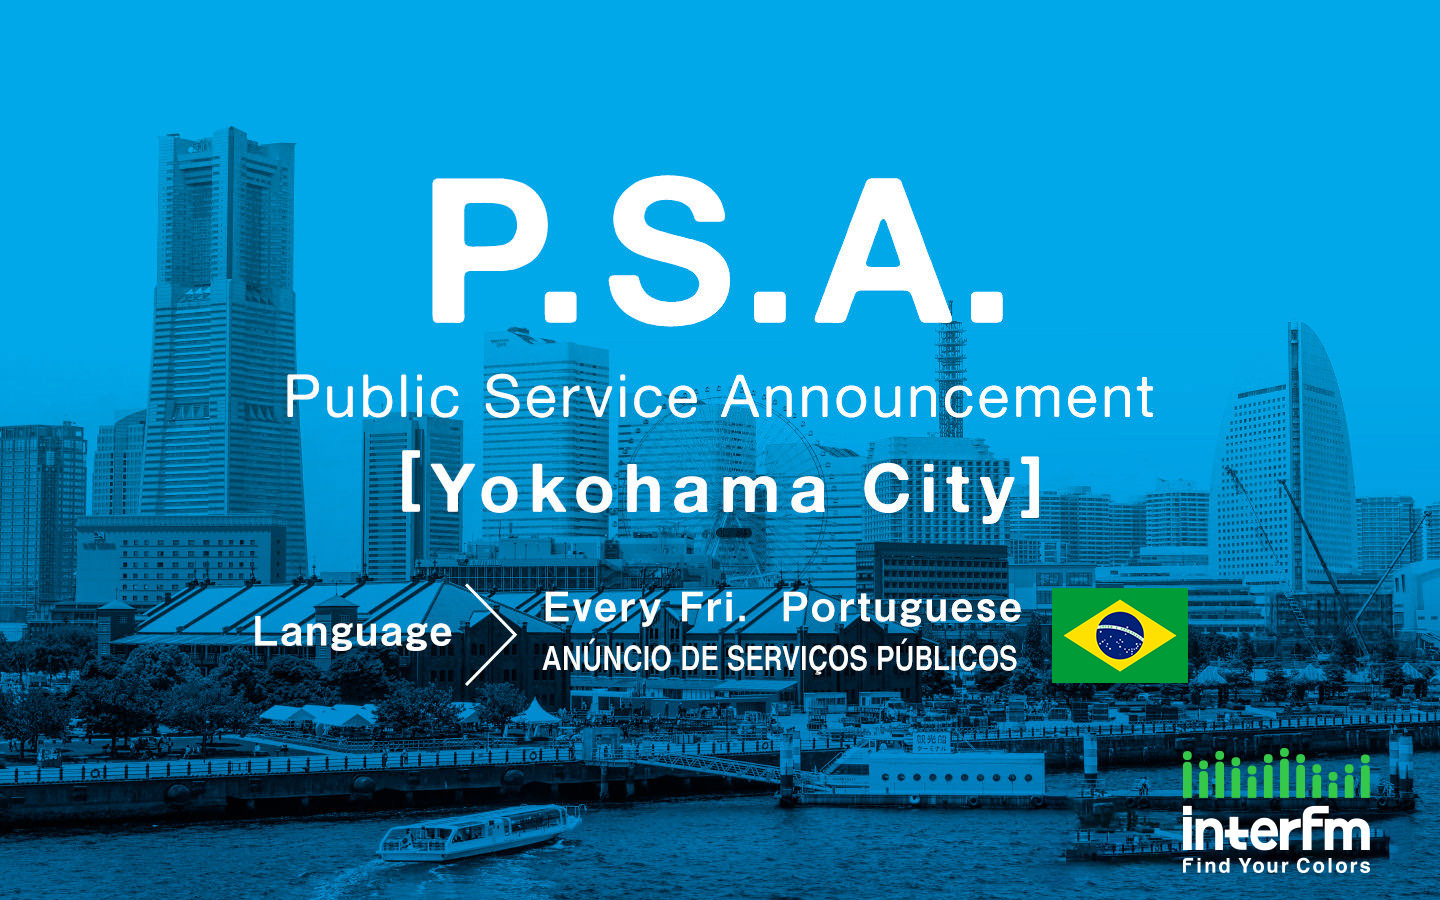 Public Service Announcement - Cidade de Yokohama (Português)